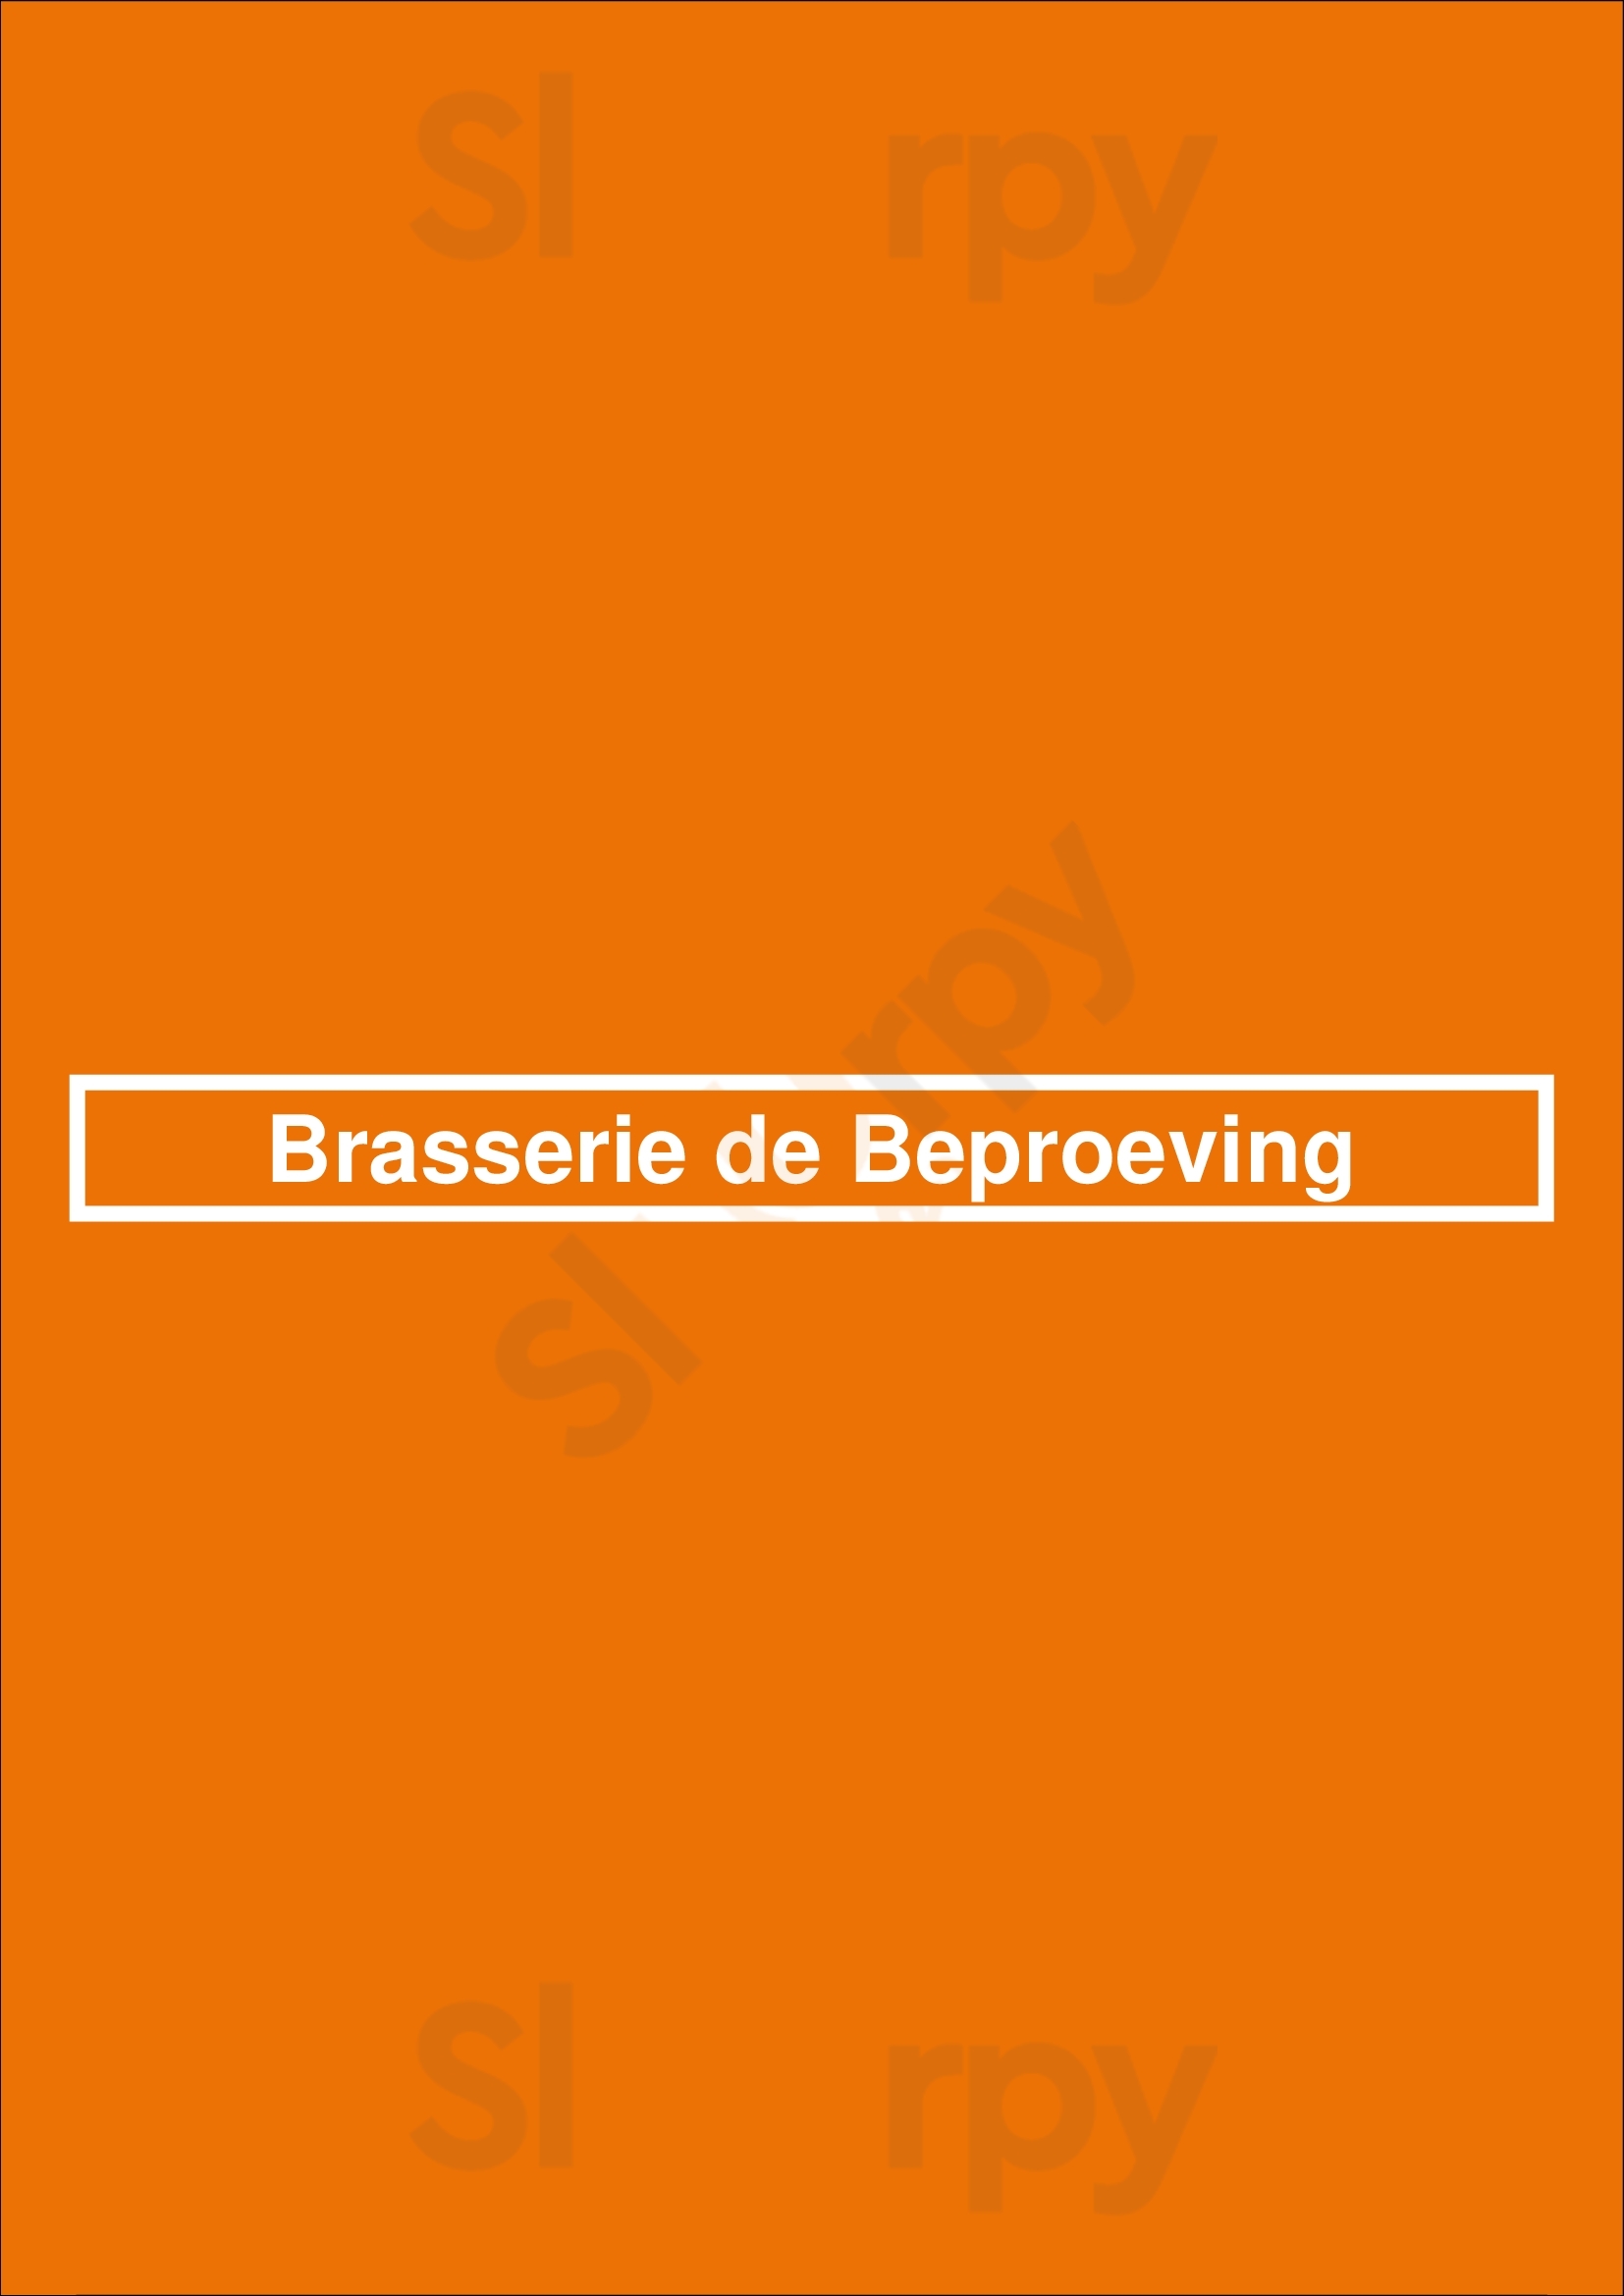 Brasserie De Beproeving Leiden Menu - 1